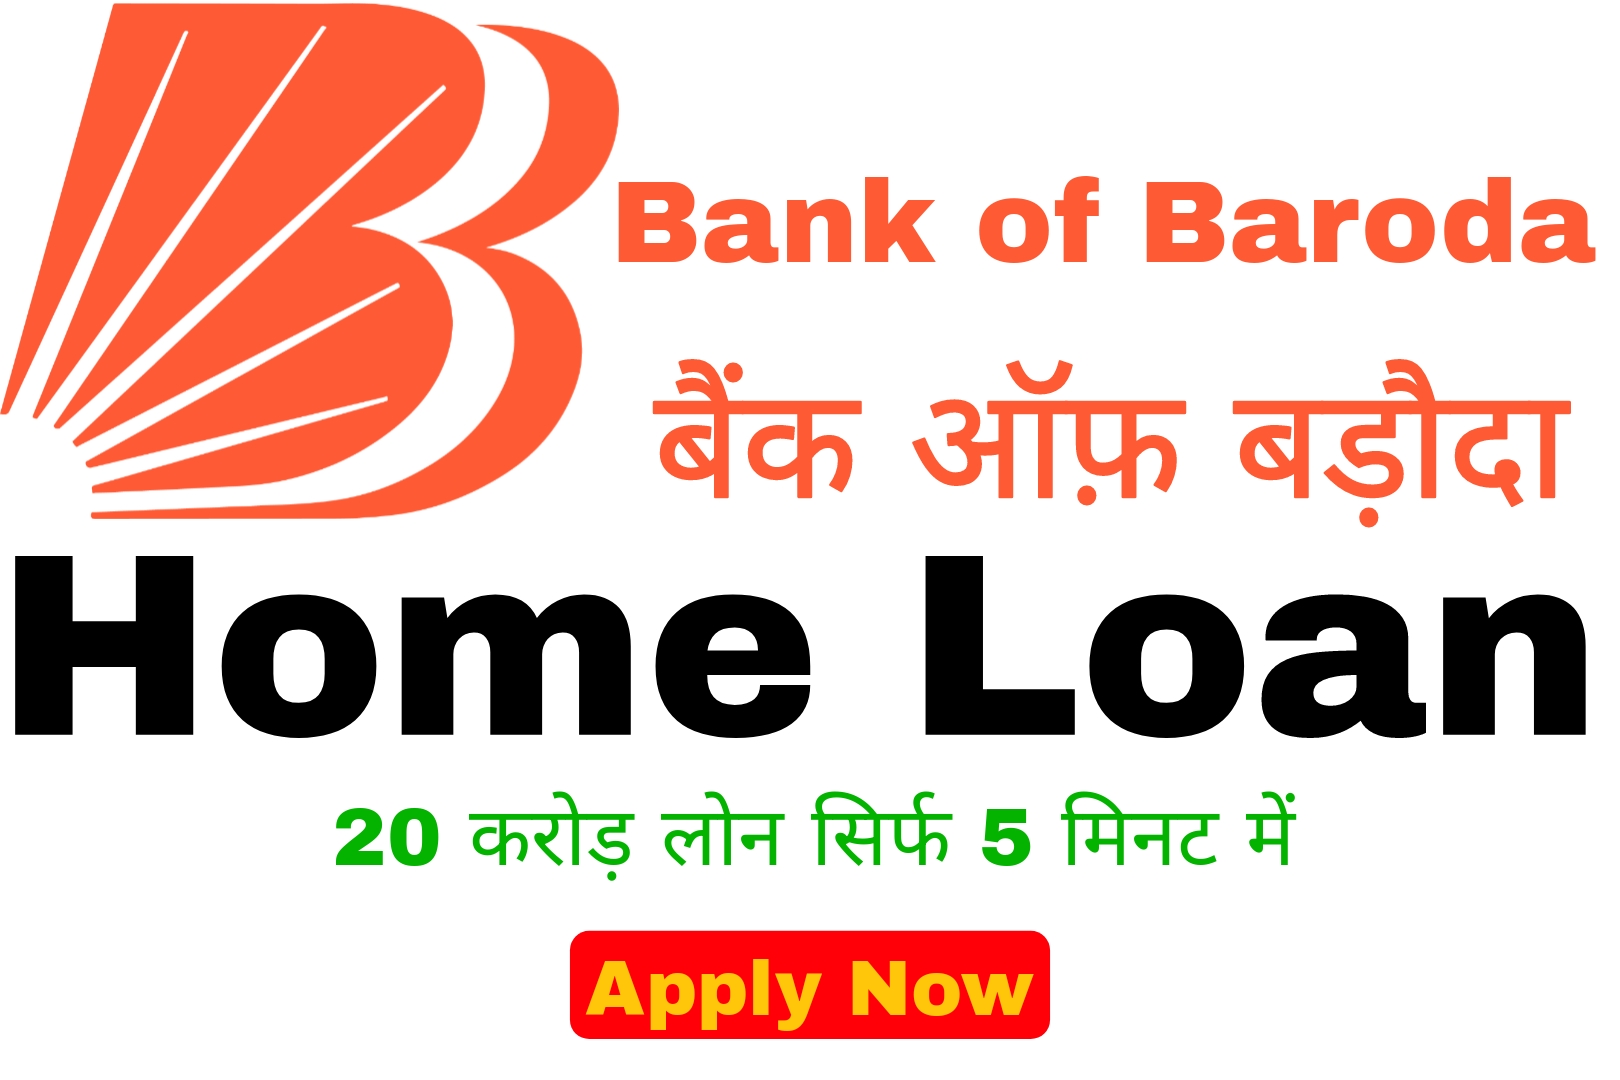 Bank of Baroda Home Loan